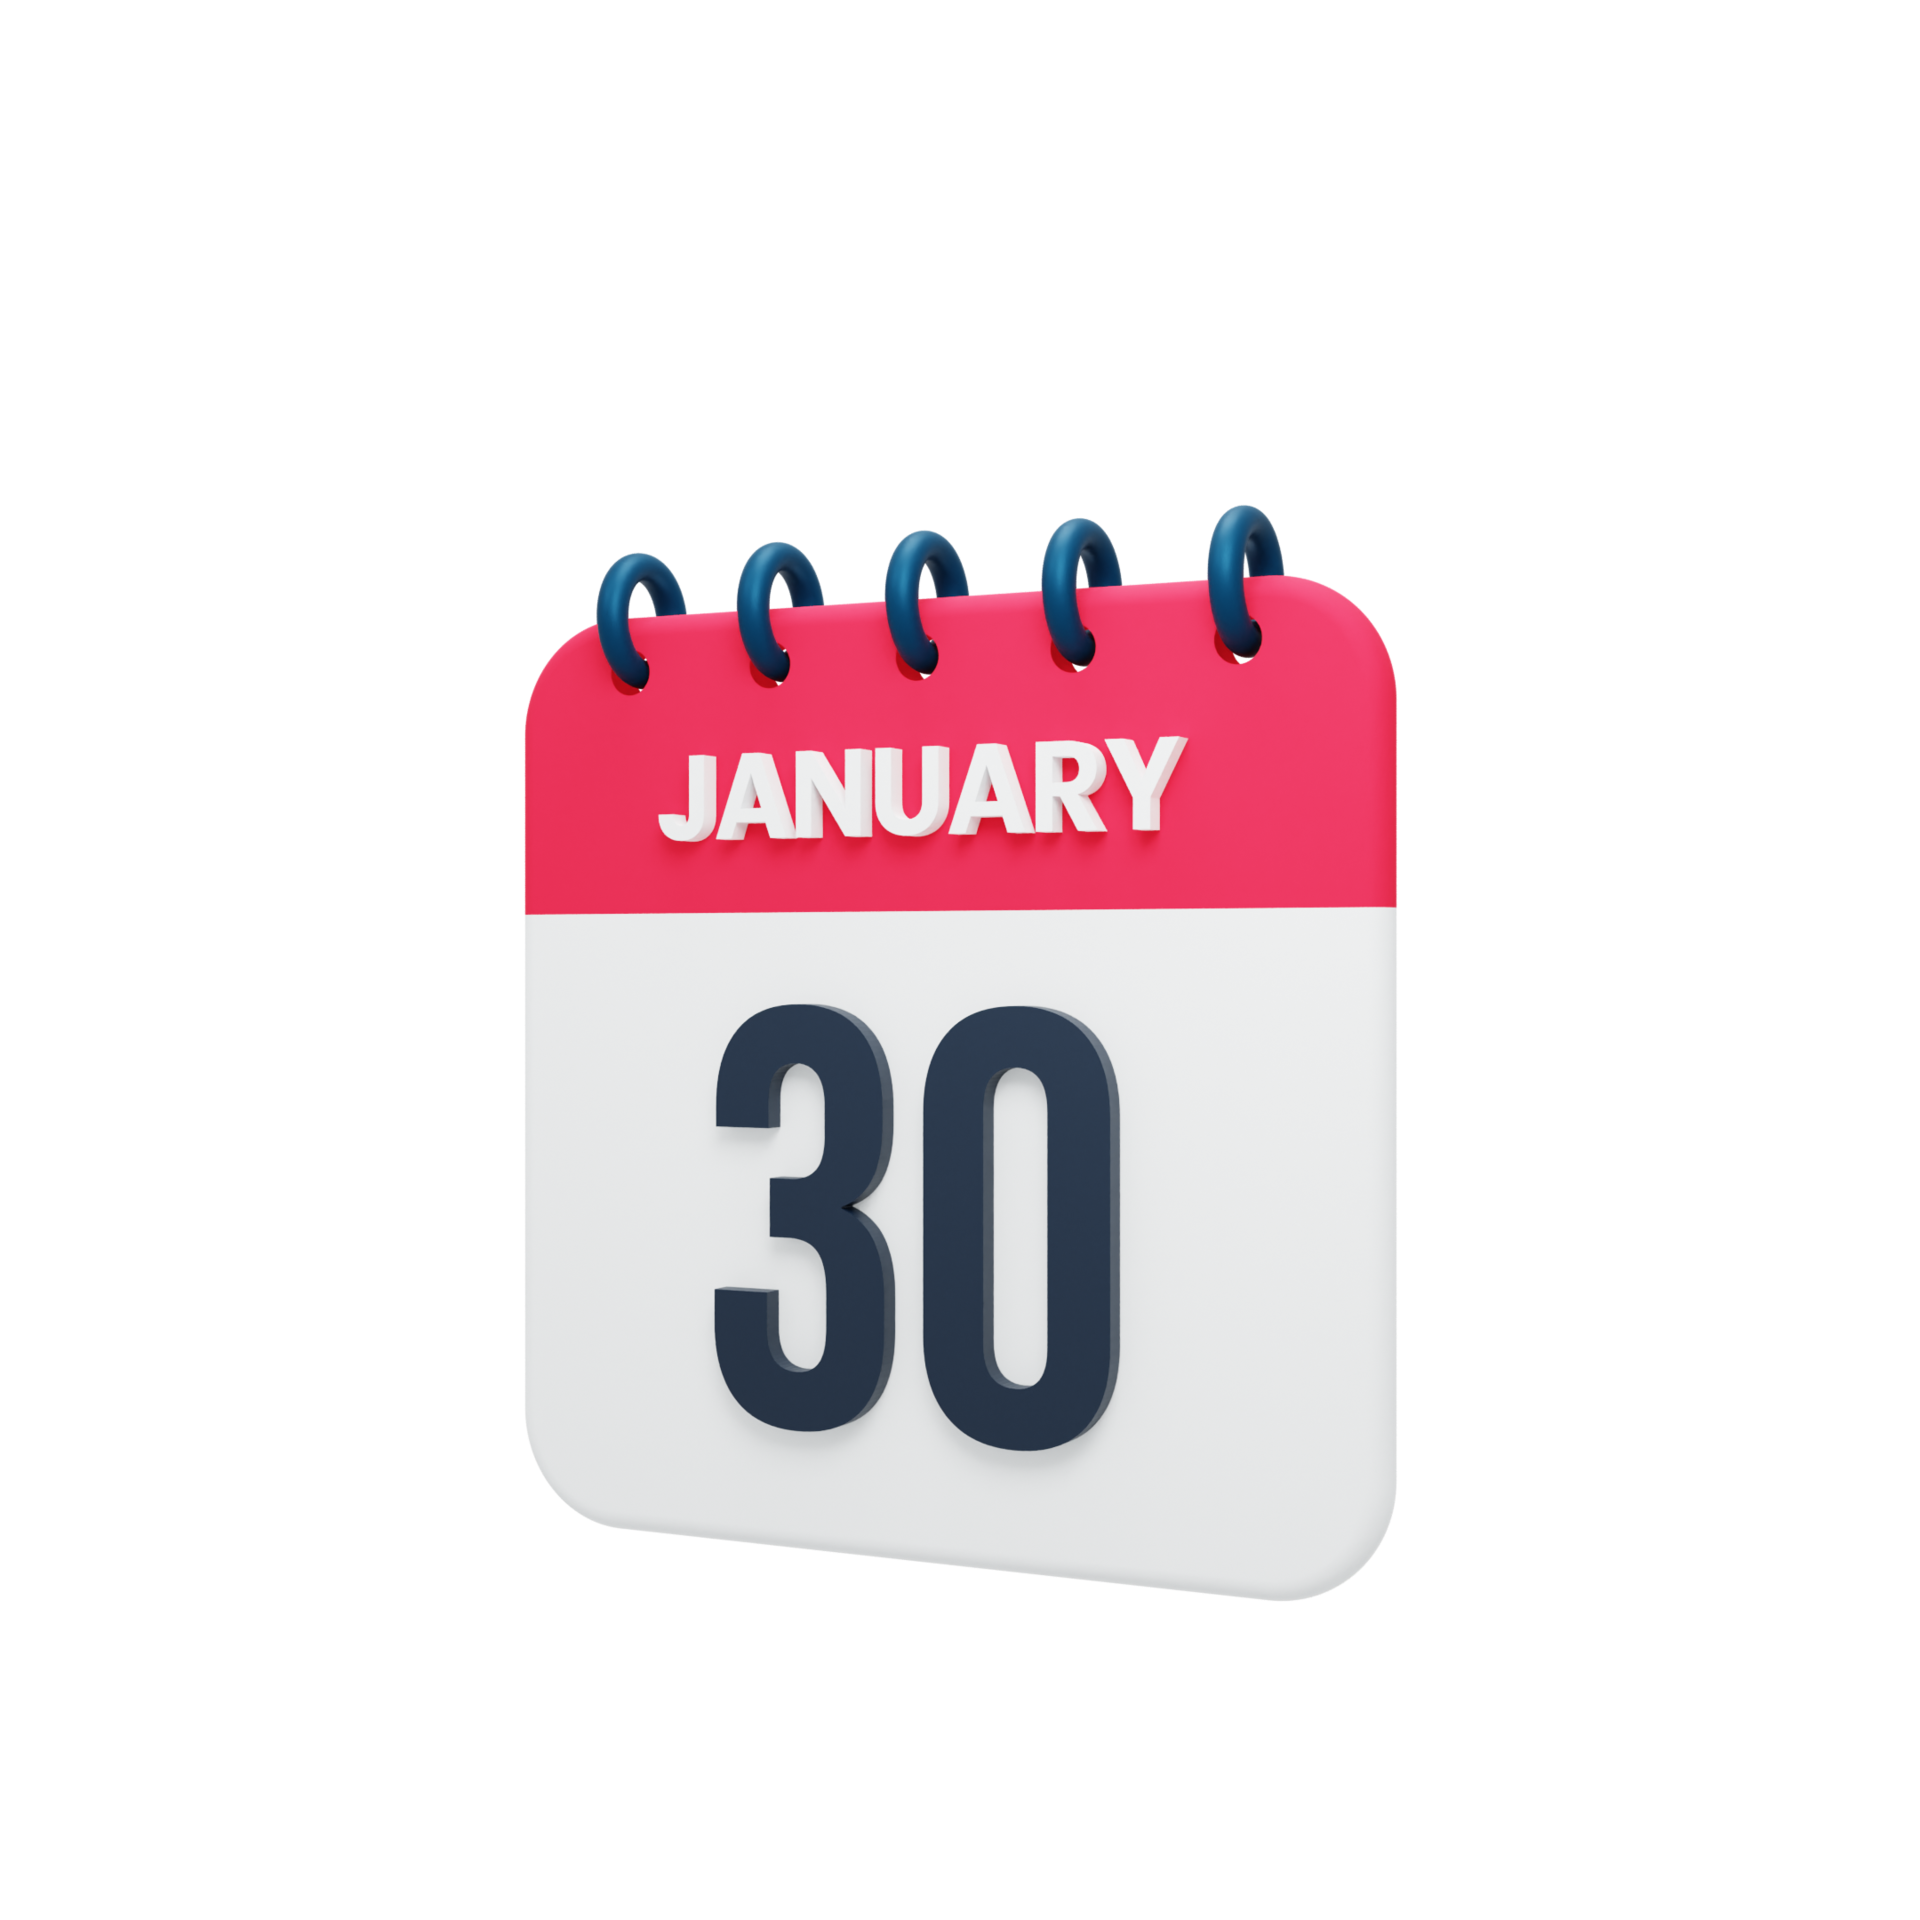 free-january-realistic-calendar-icon-3d-illustration-date-january-30